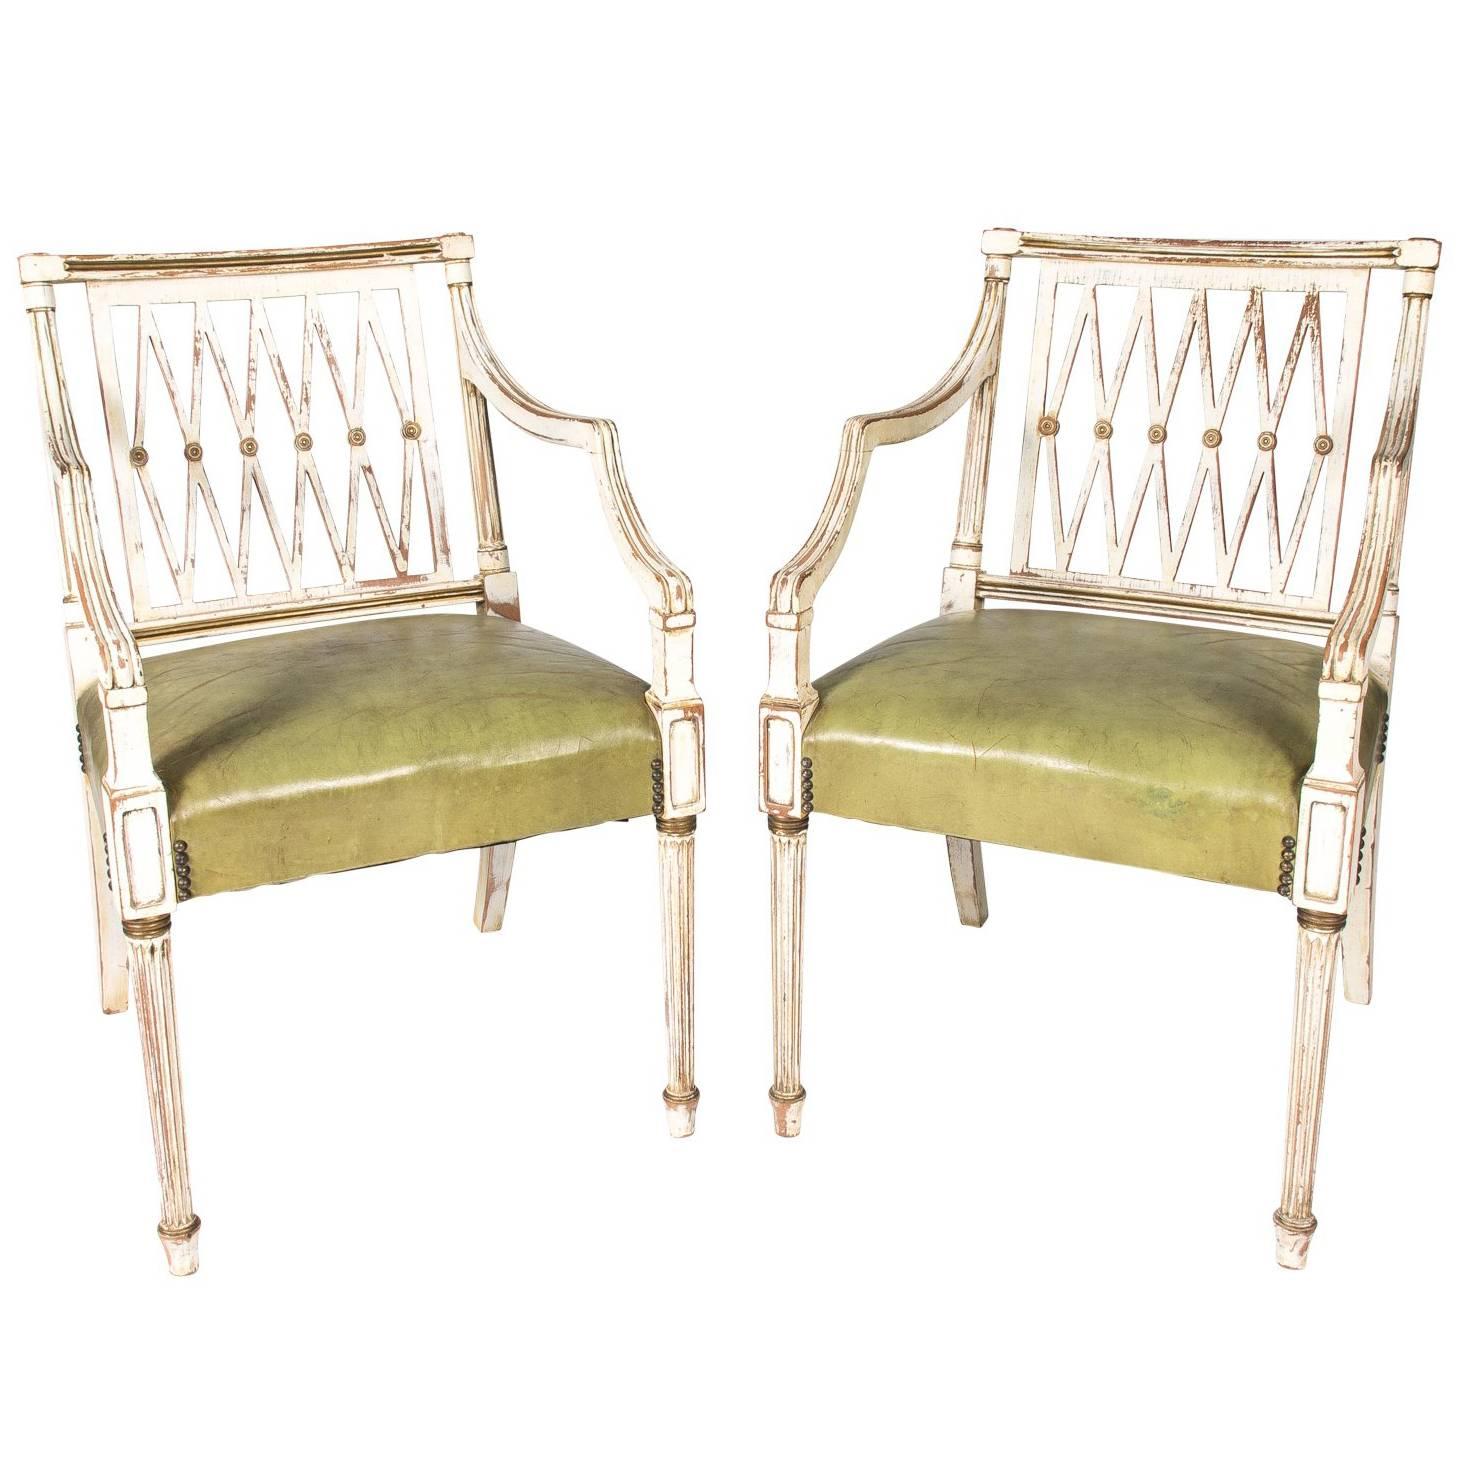 Pair of Painted Regency Style Armchairs